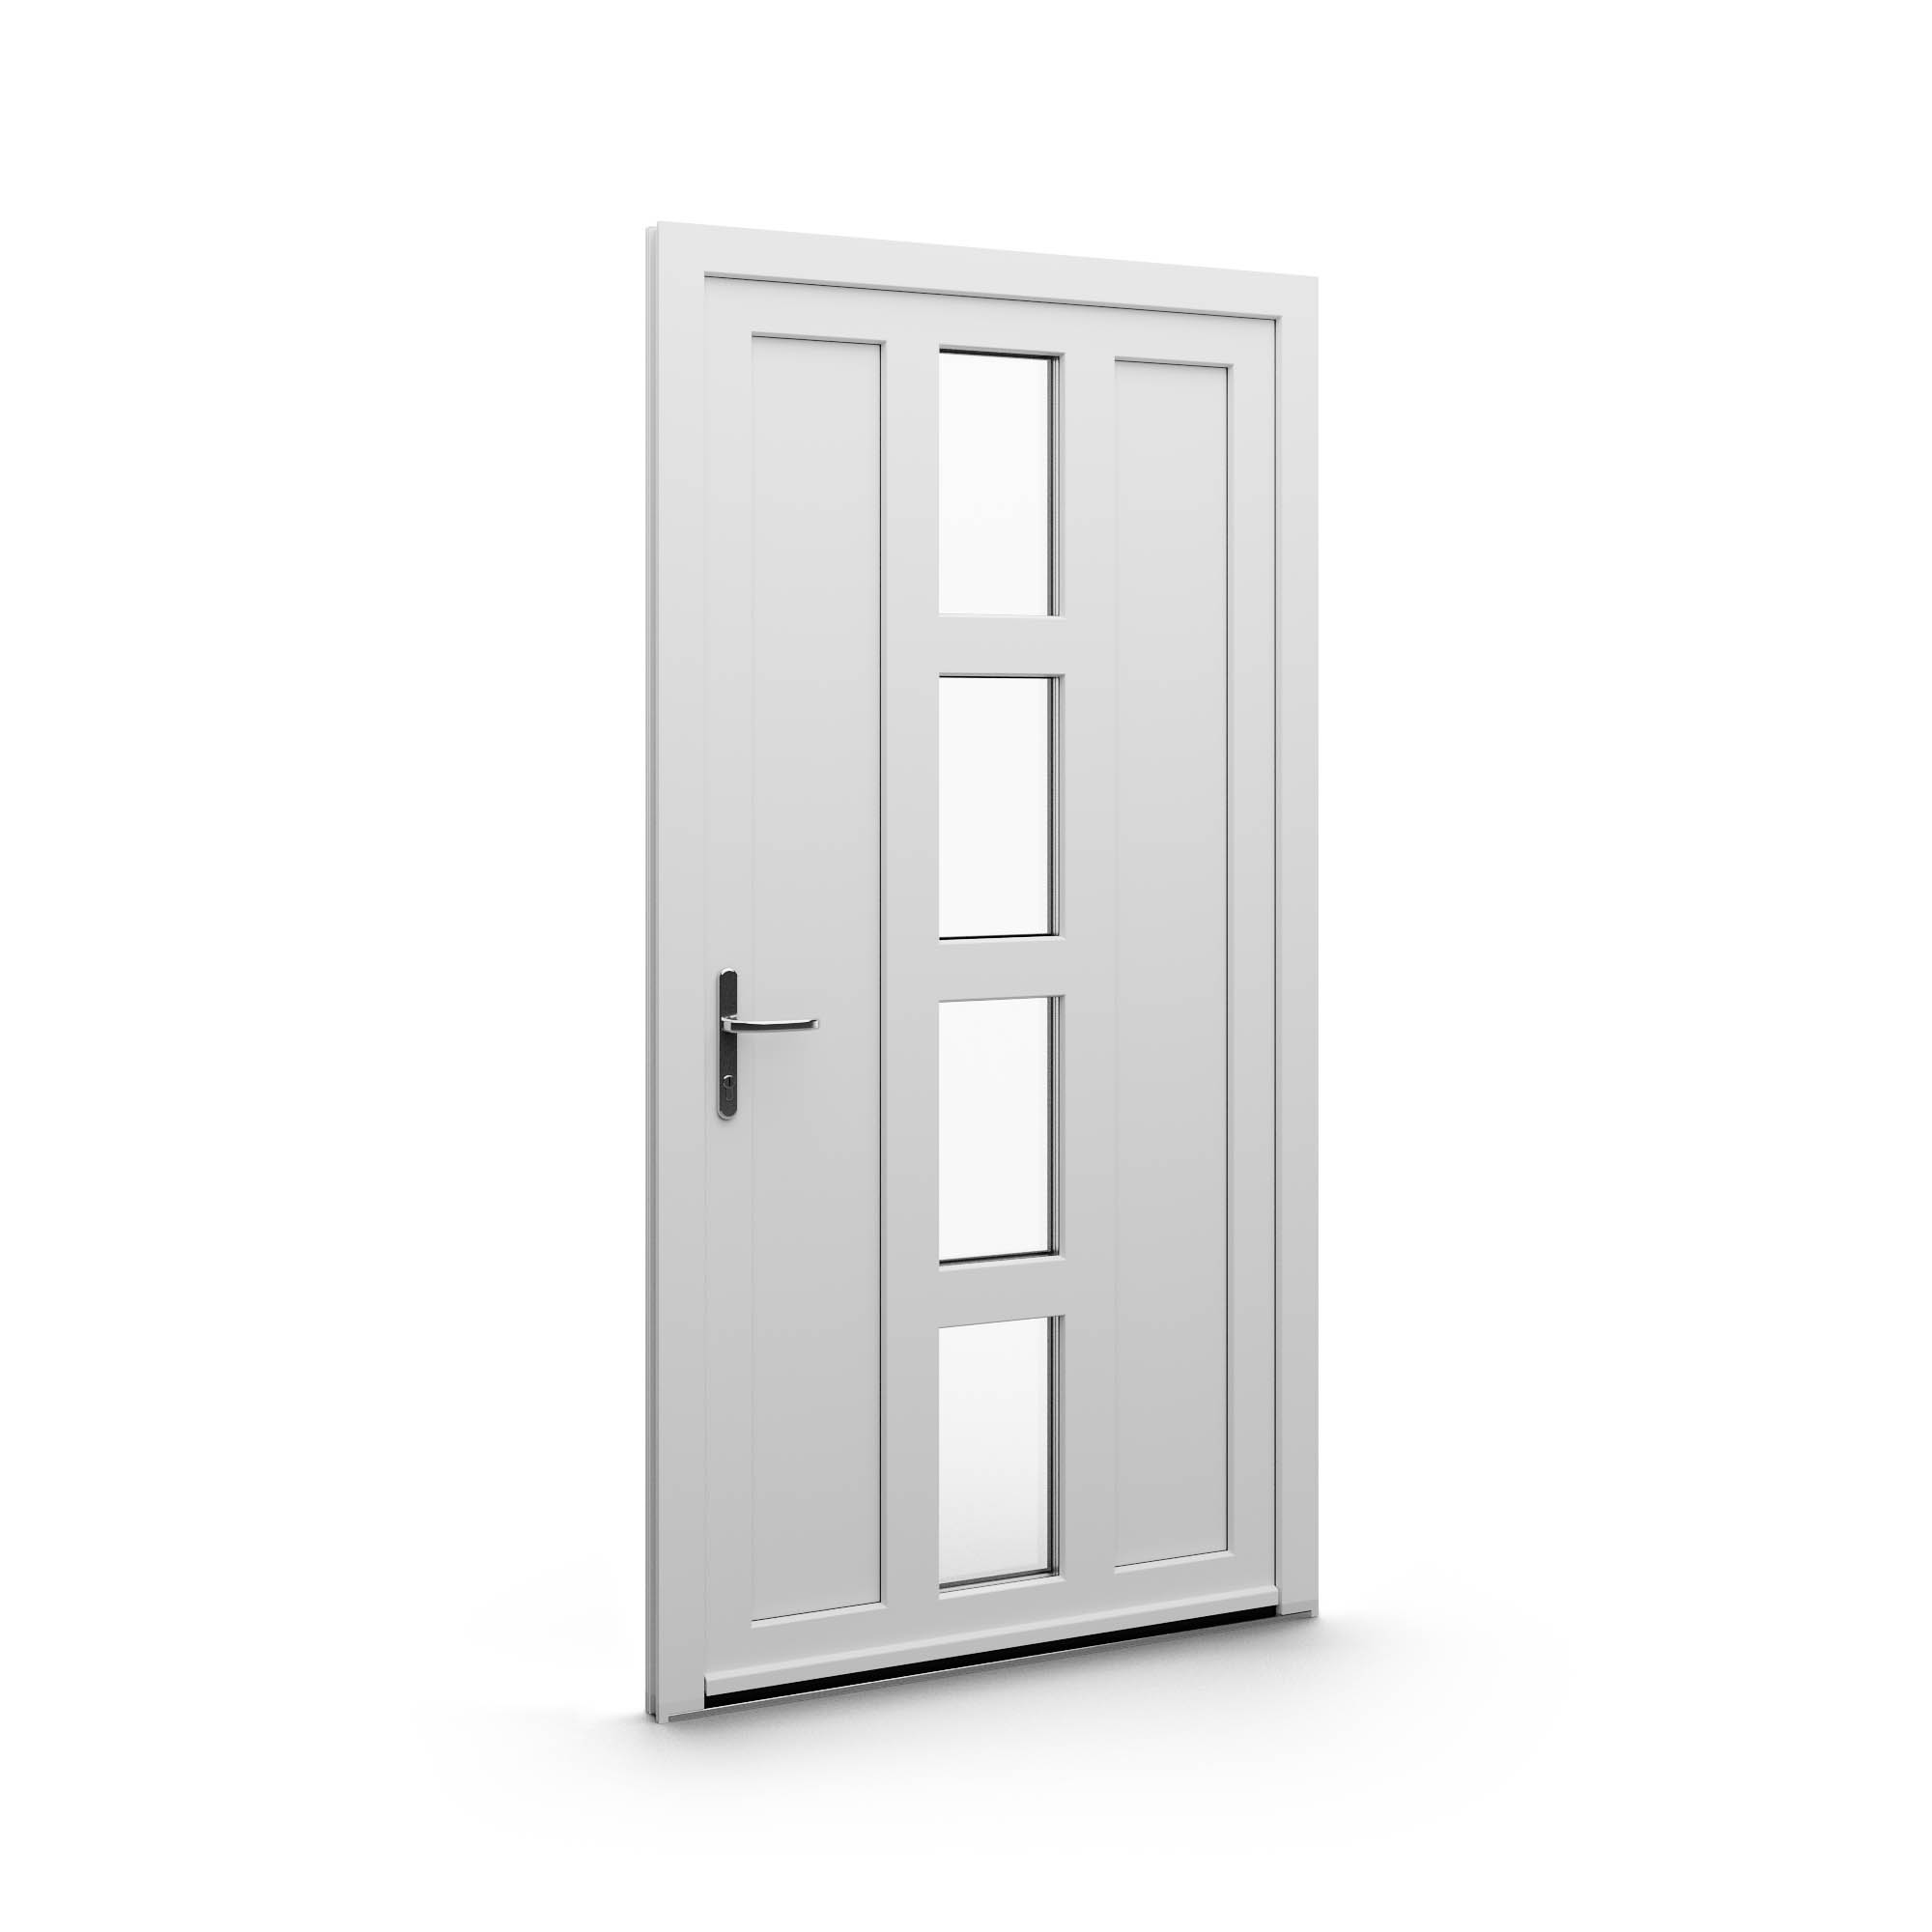 PVC model doors